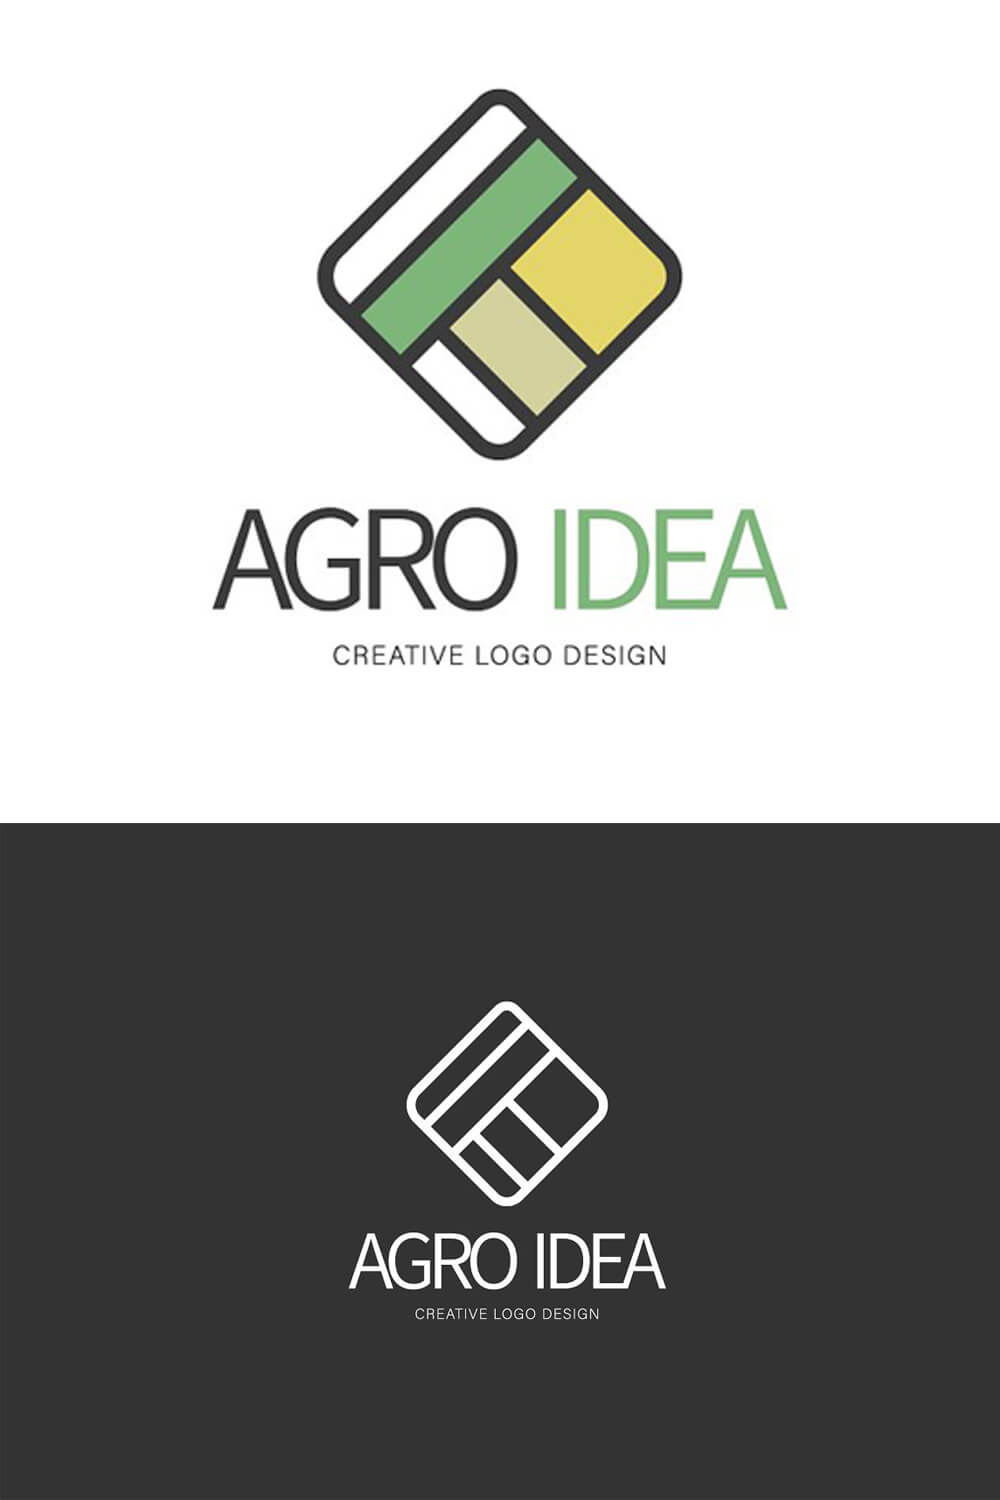 Inscription logotype: Agro Idea, Creative logo design for Pinterest.